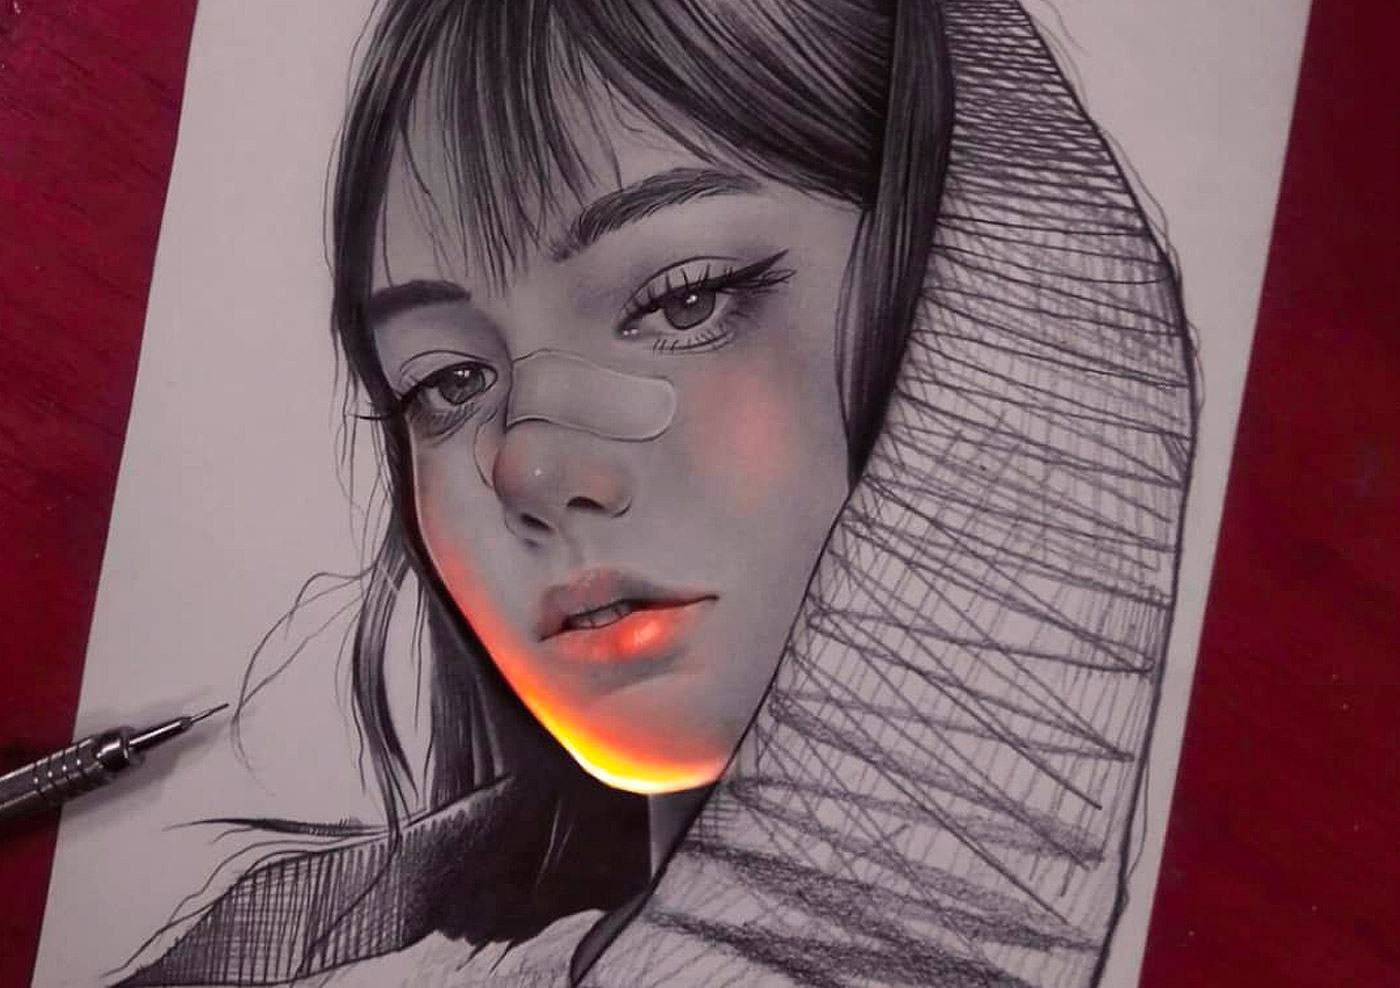 Lit: Fluorescent Pencil Drawings by Enrique Bernal | Daily design ...